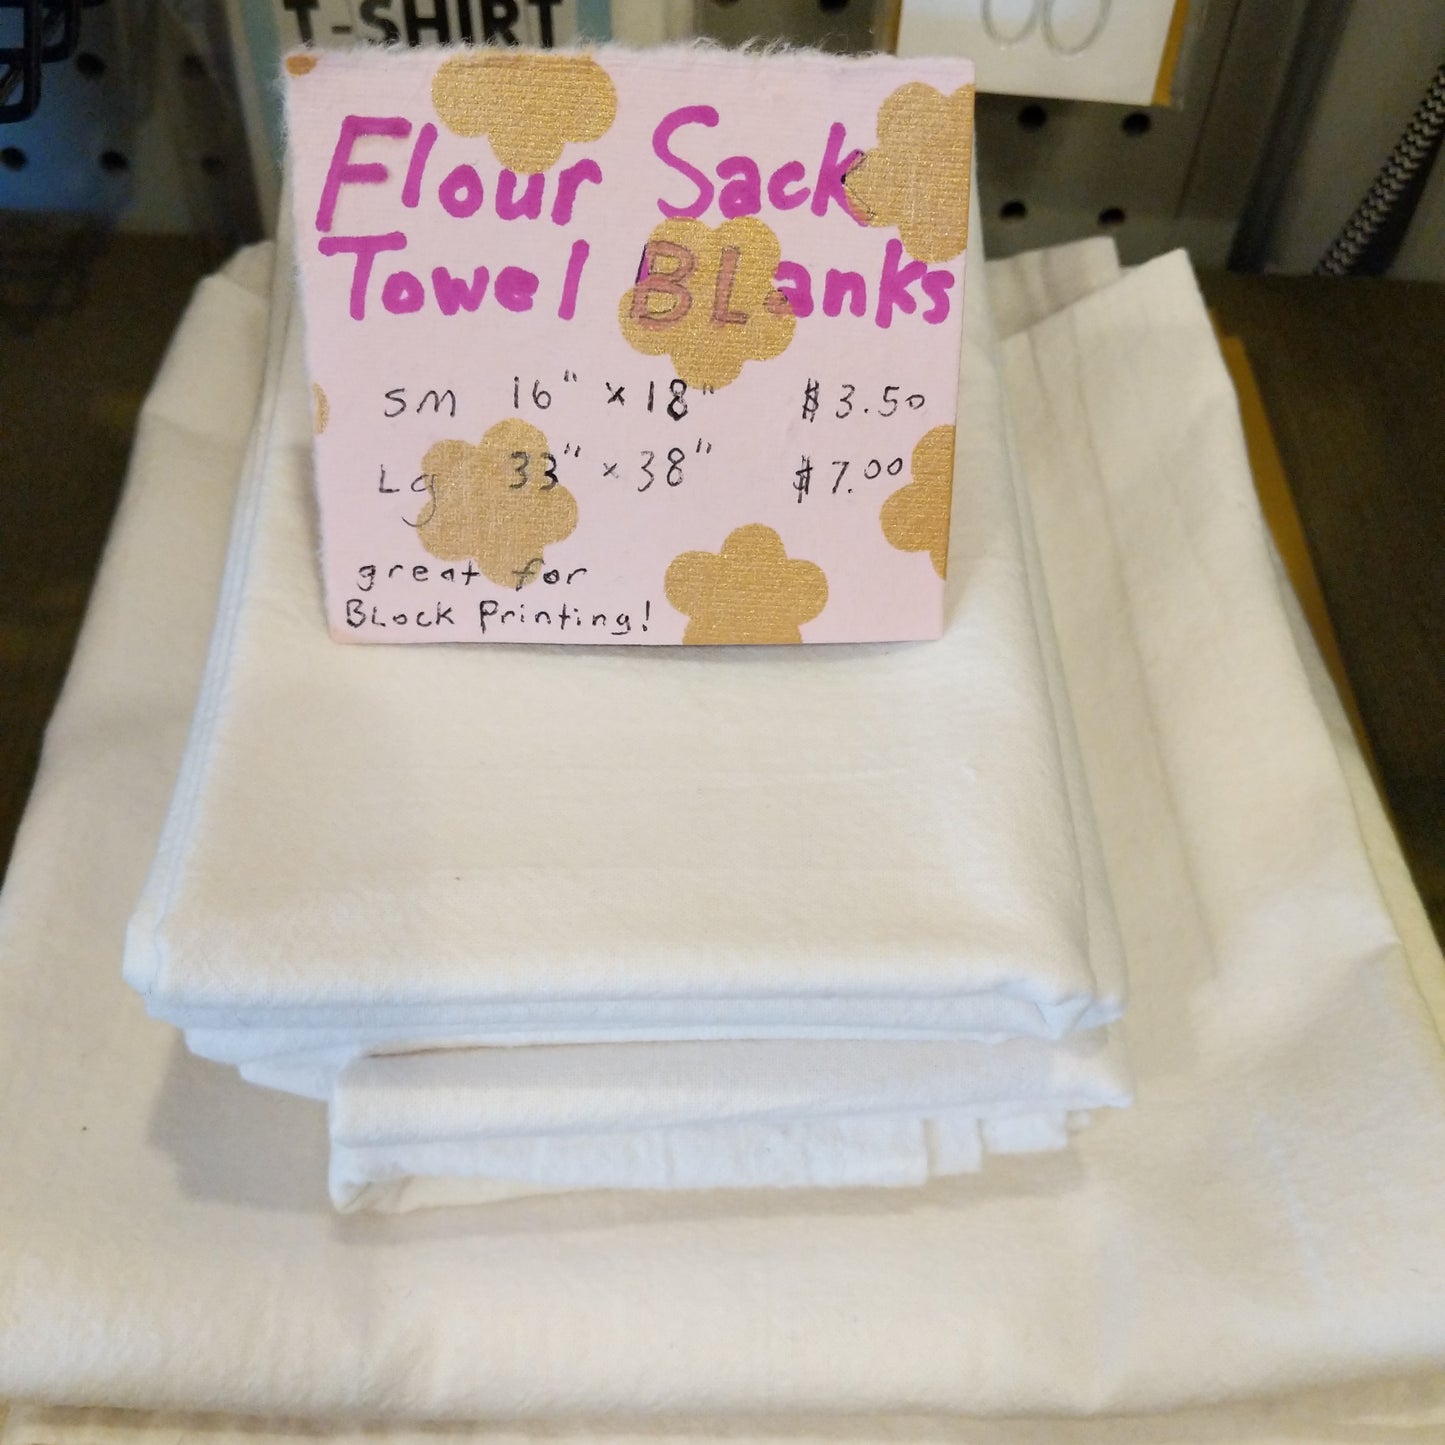 Flour sack towel blanks